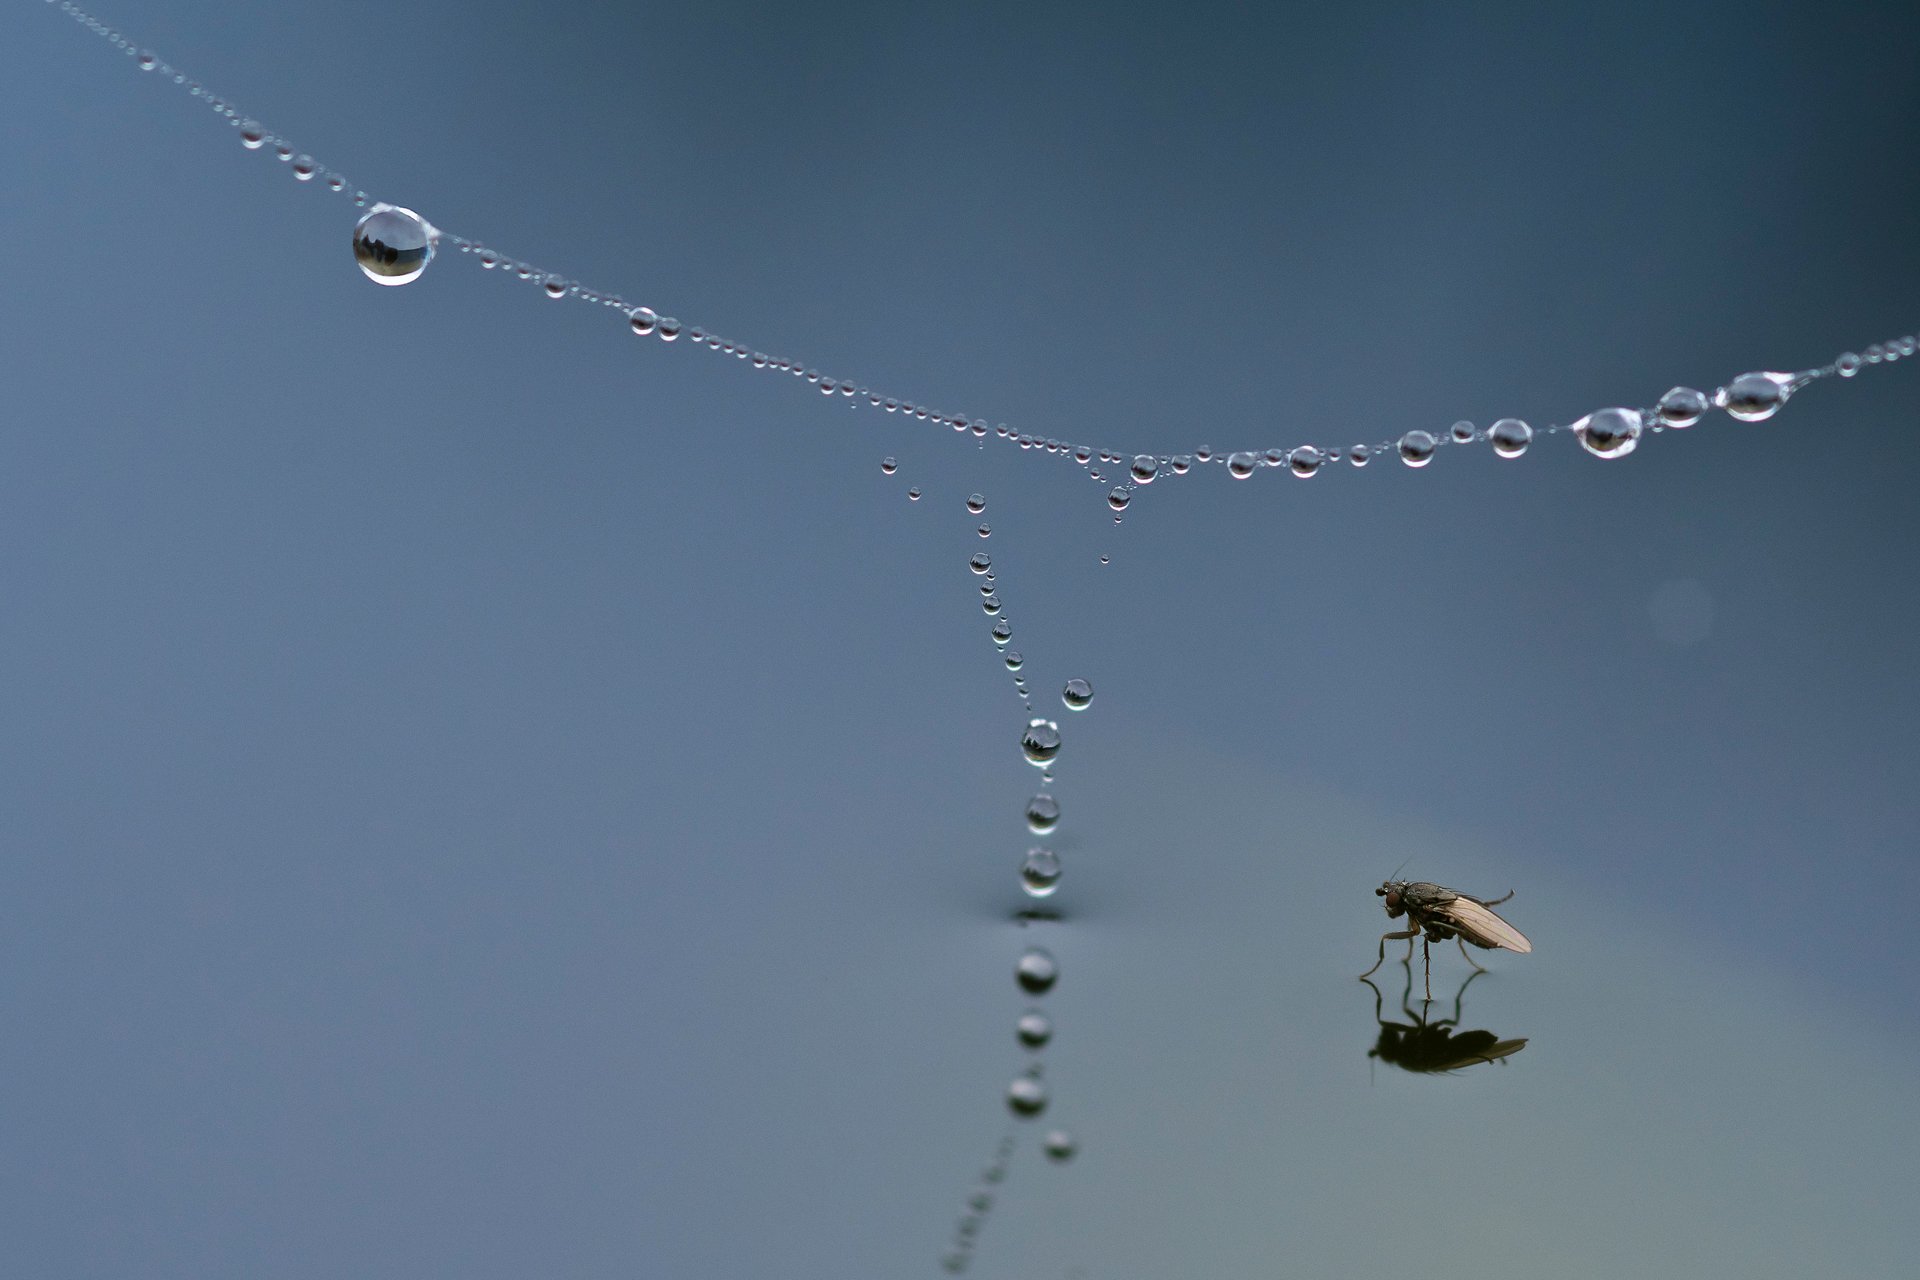 radisics-m-wingedlife-fly-beneath-a-spider-web.jpg